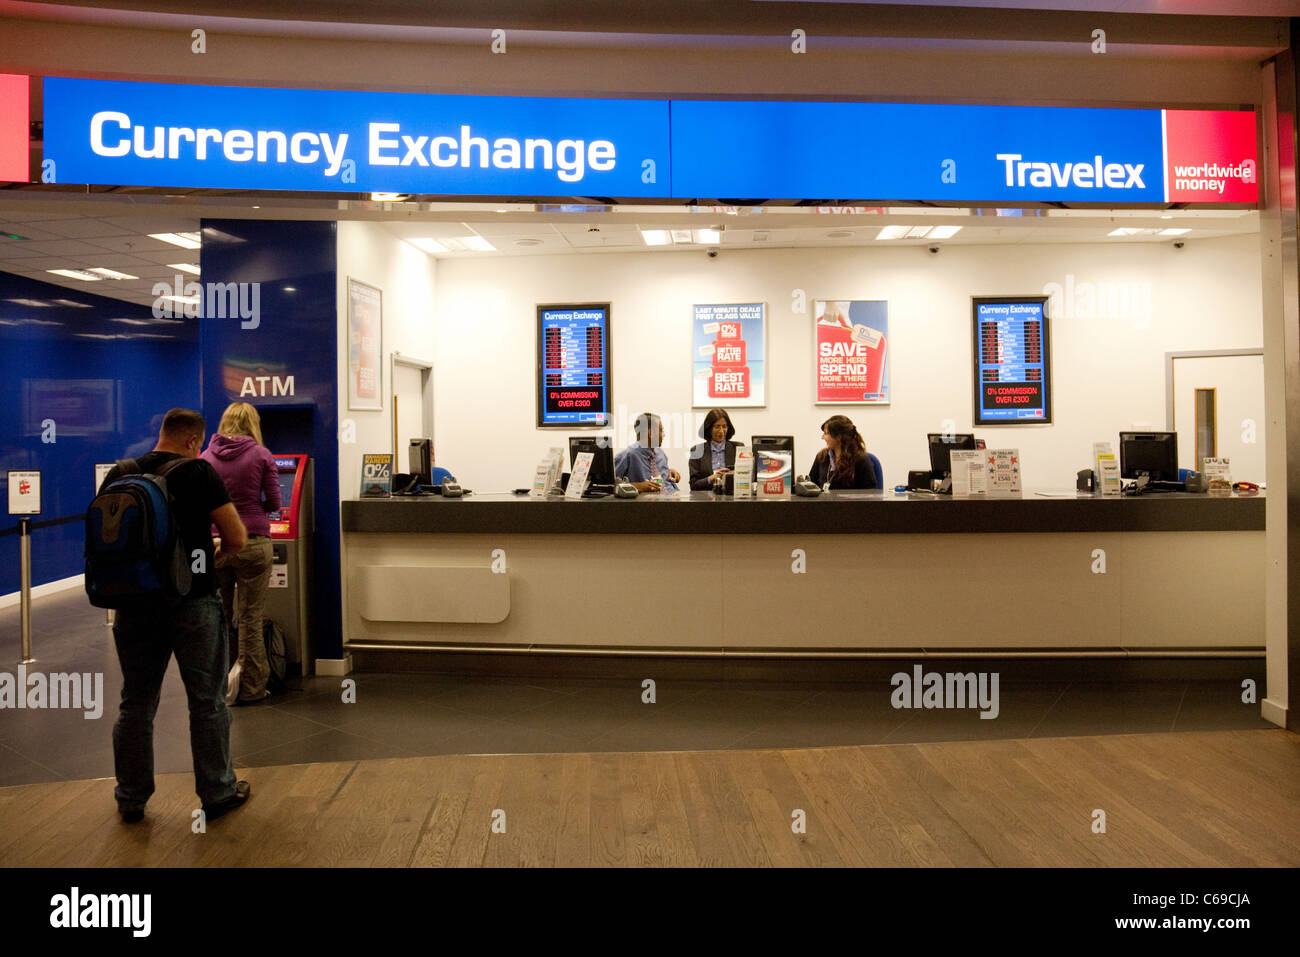 Travelex currency exchange, Terminal 3, Heathrow airport London UK Stock Photo